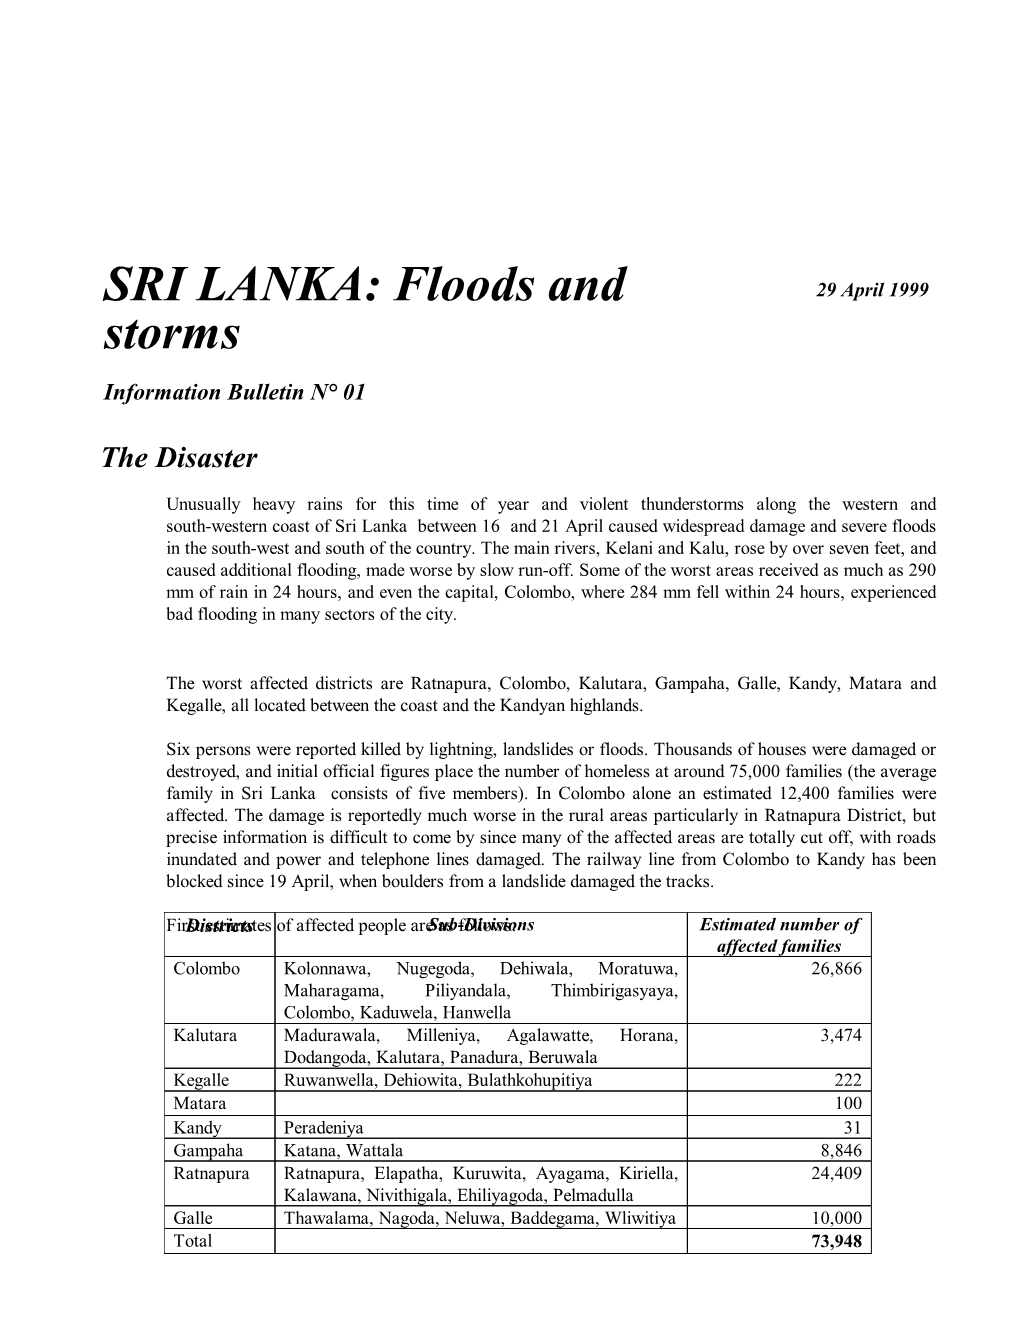 SRI LANKA Floods and Storms